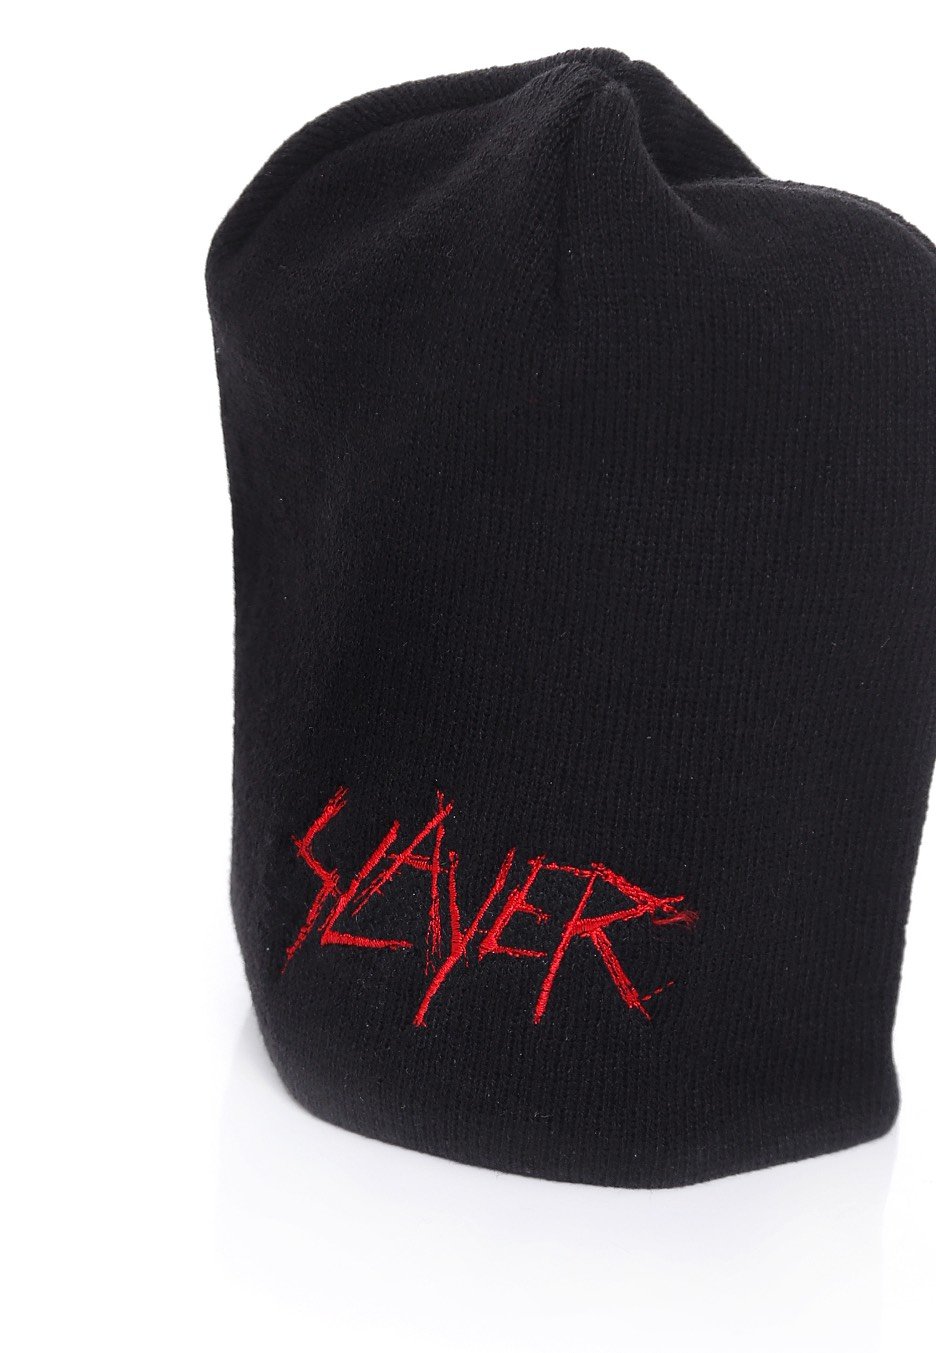 Slayer - Logo - Beanie